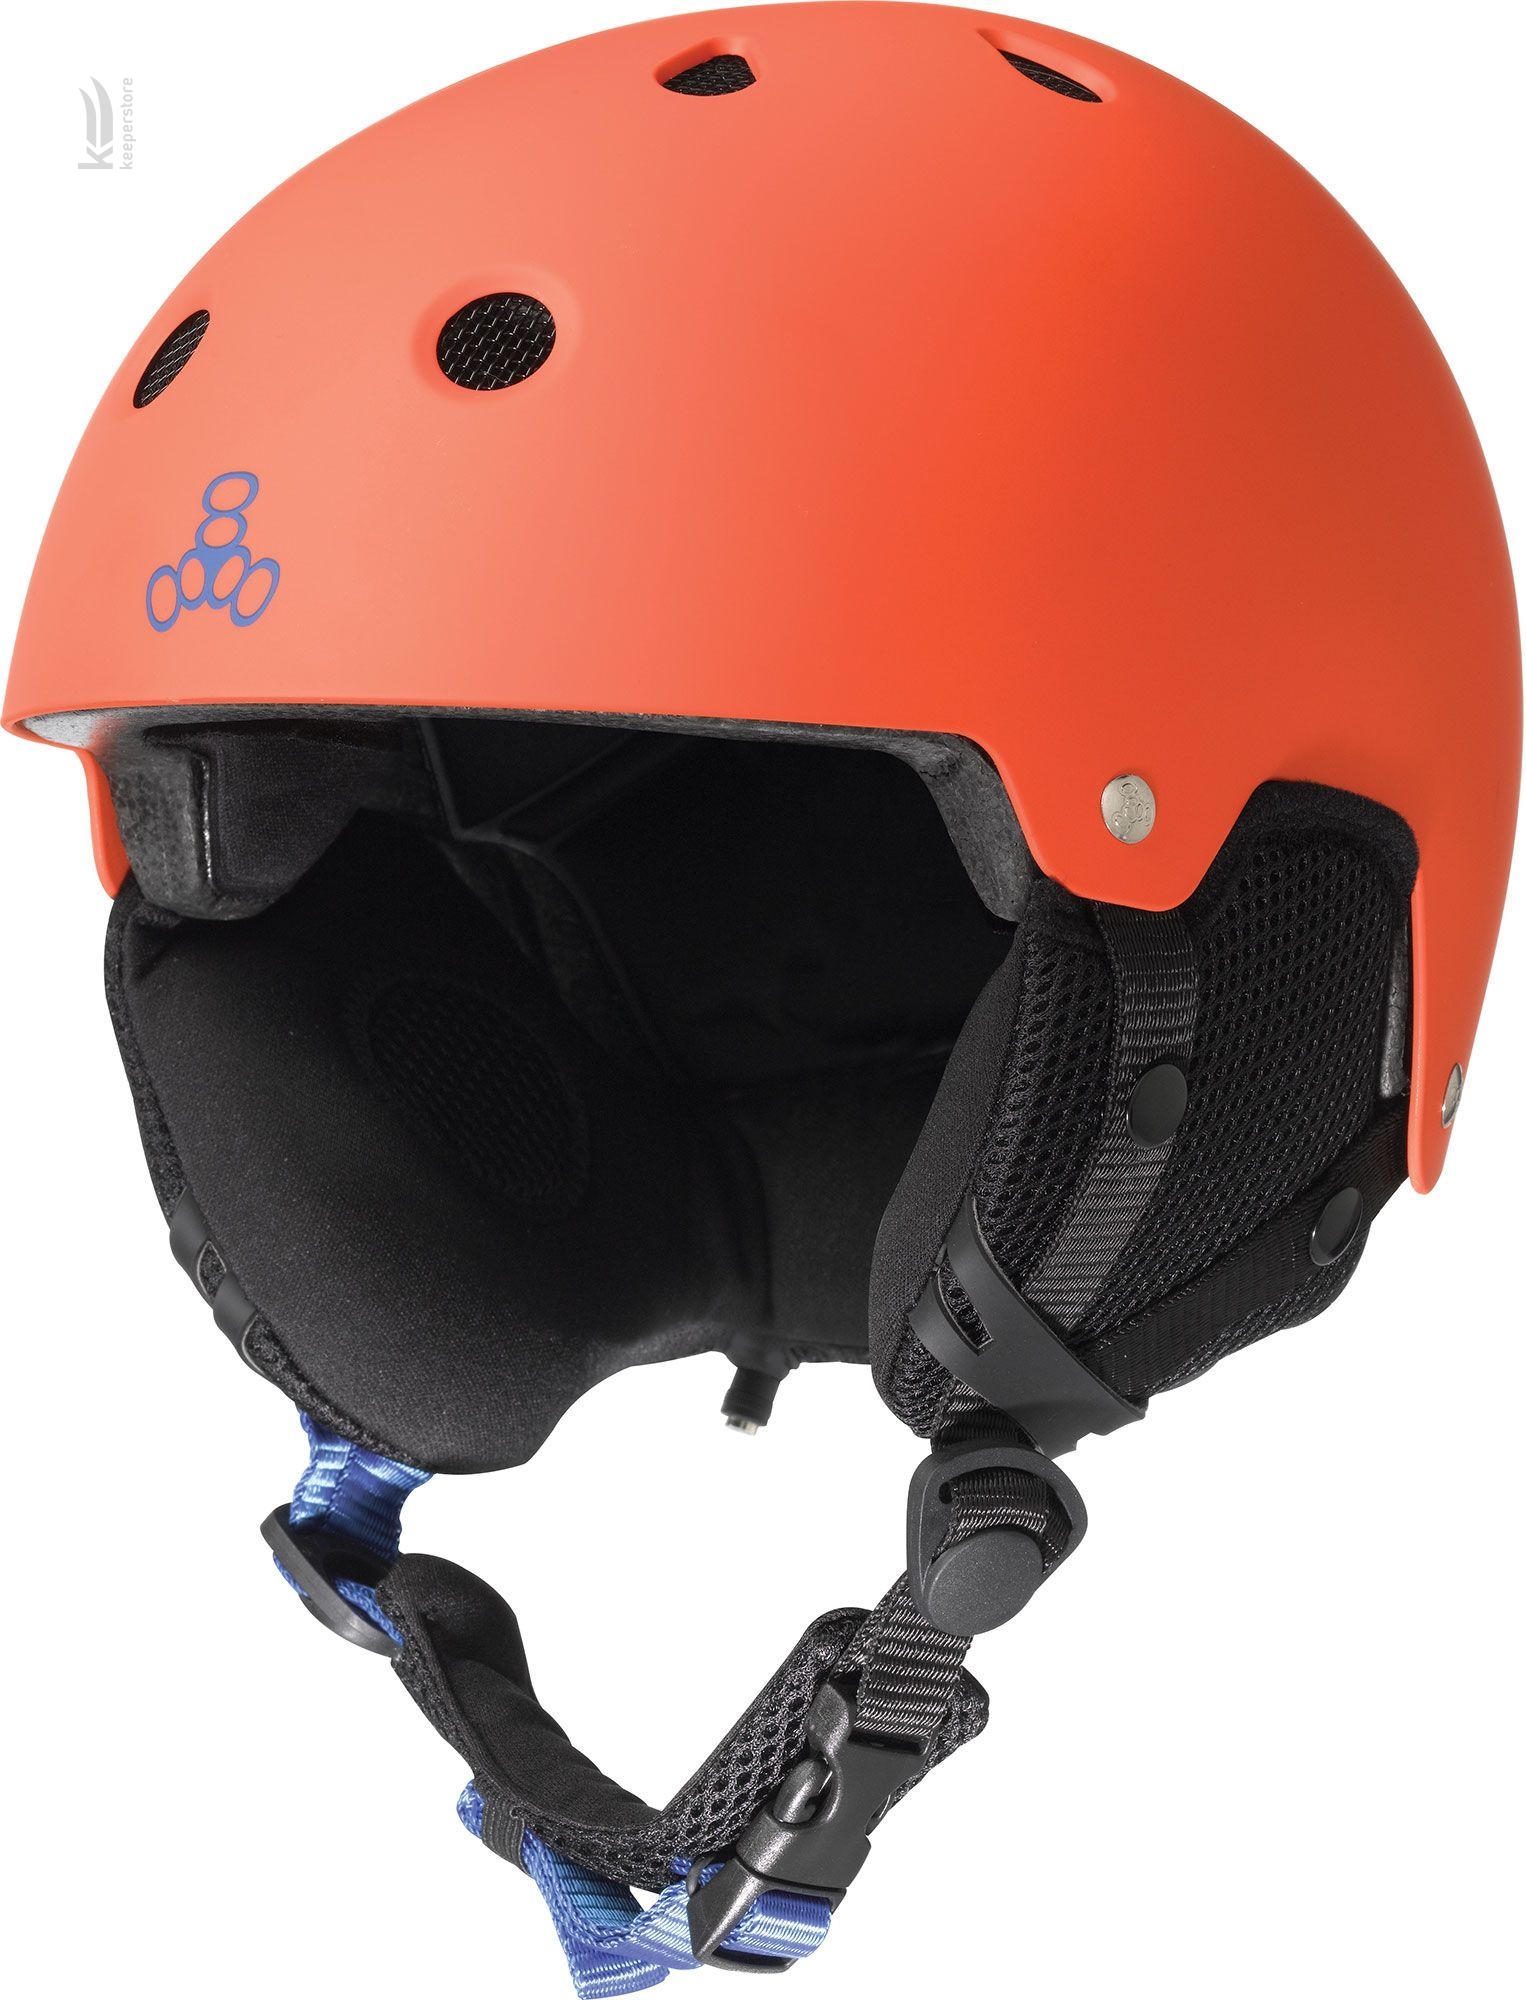 Шлем для сноубординга Triple8 Audio Snow Helmet Orange